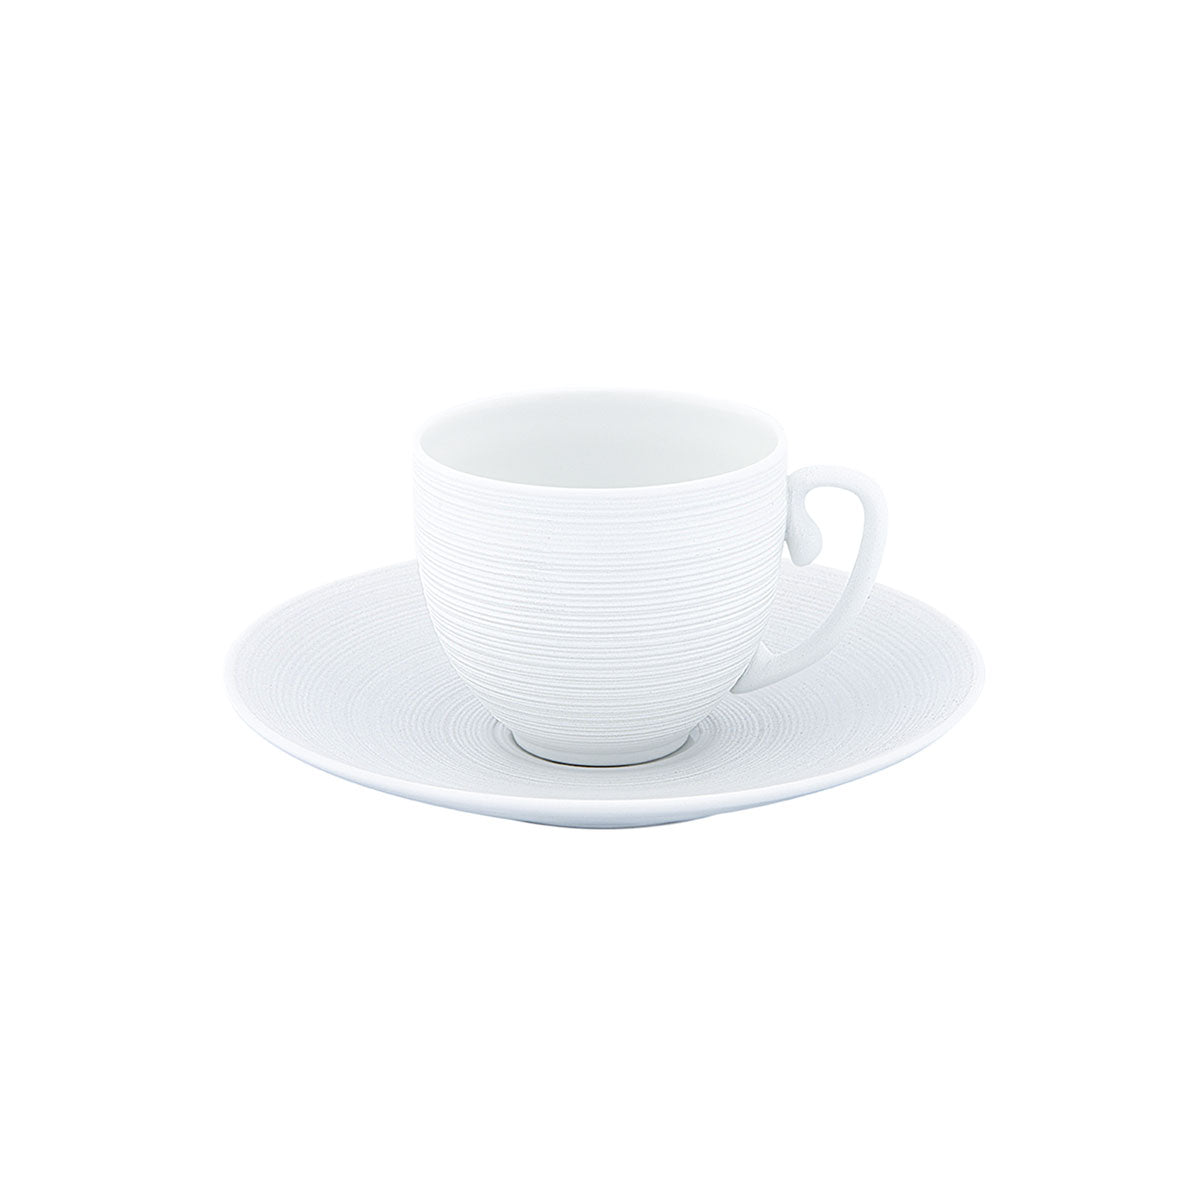 HEMISPHERE Blanc Satiné - Tasse café extra & soucoupe